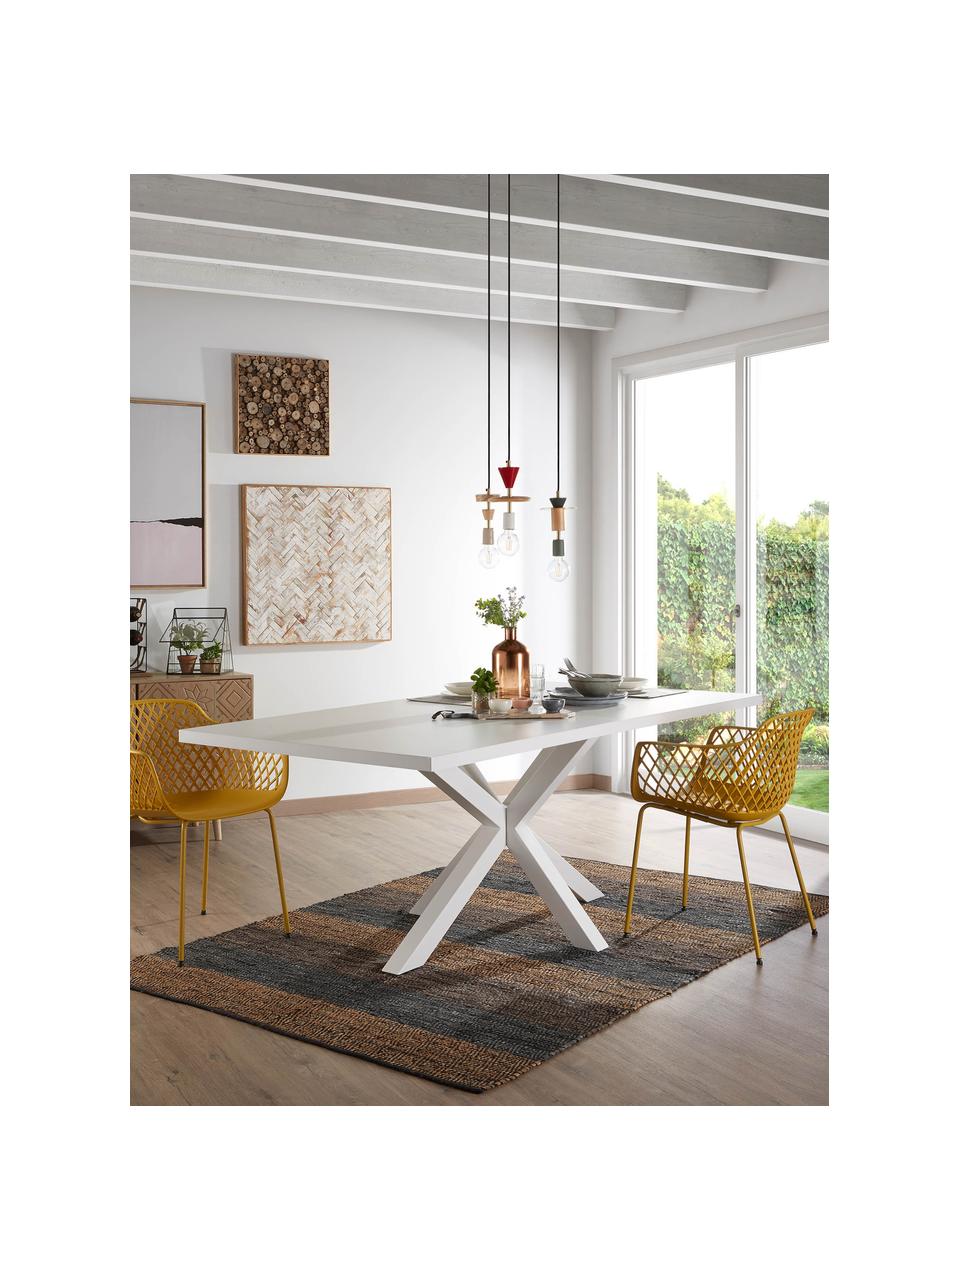 Table blanche en bois et métal New-Arya, 160 x 100 cm, Blanc, larg. 160 x prof. 100 cm